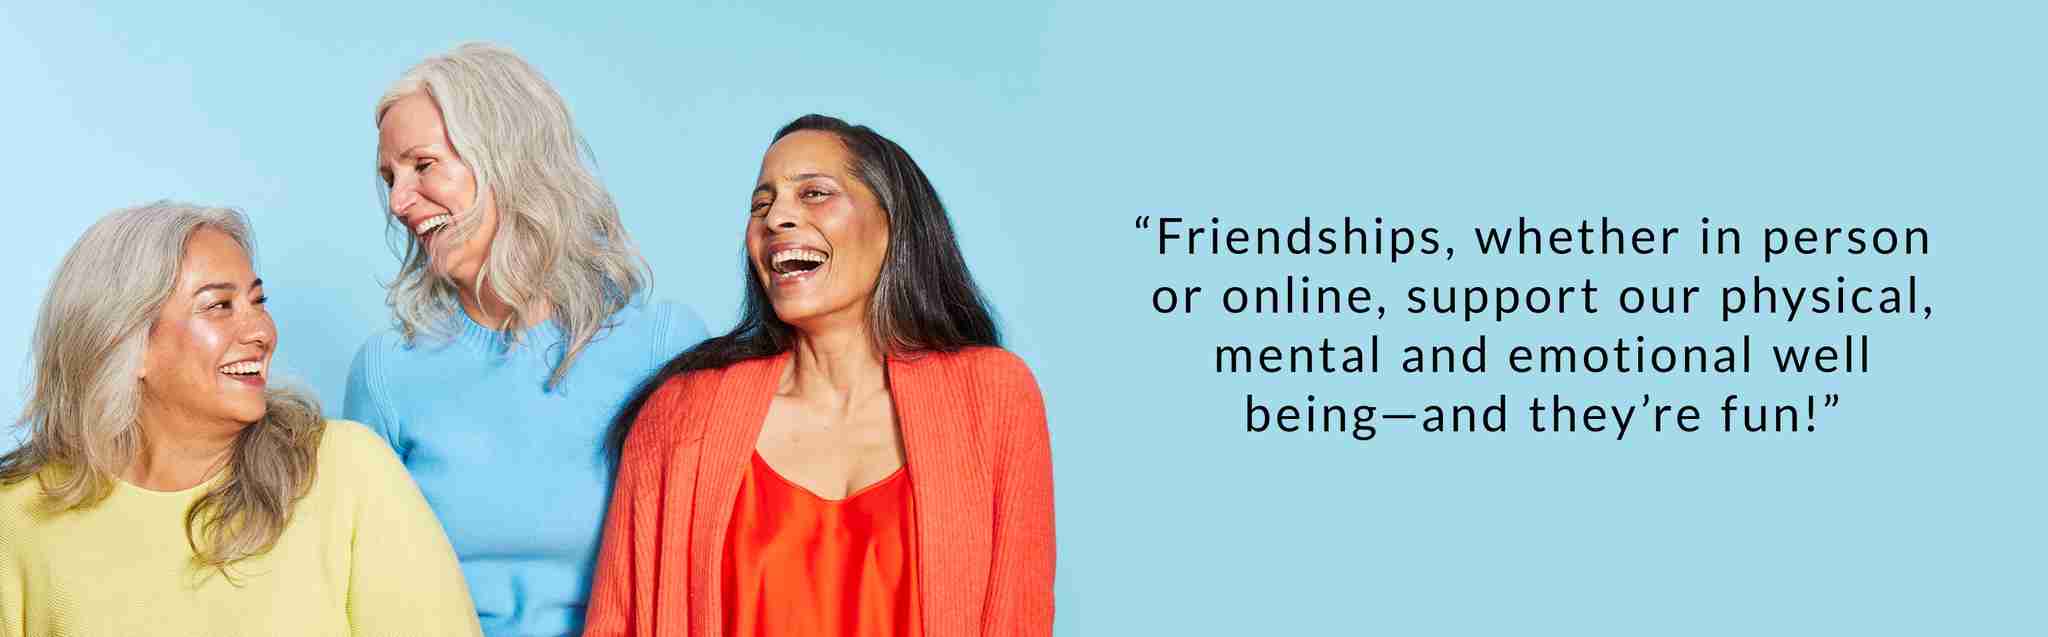 Building safe, meaningful friendships online